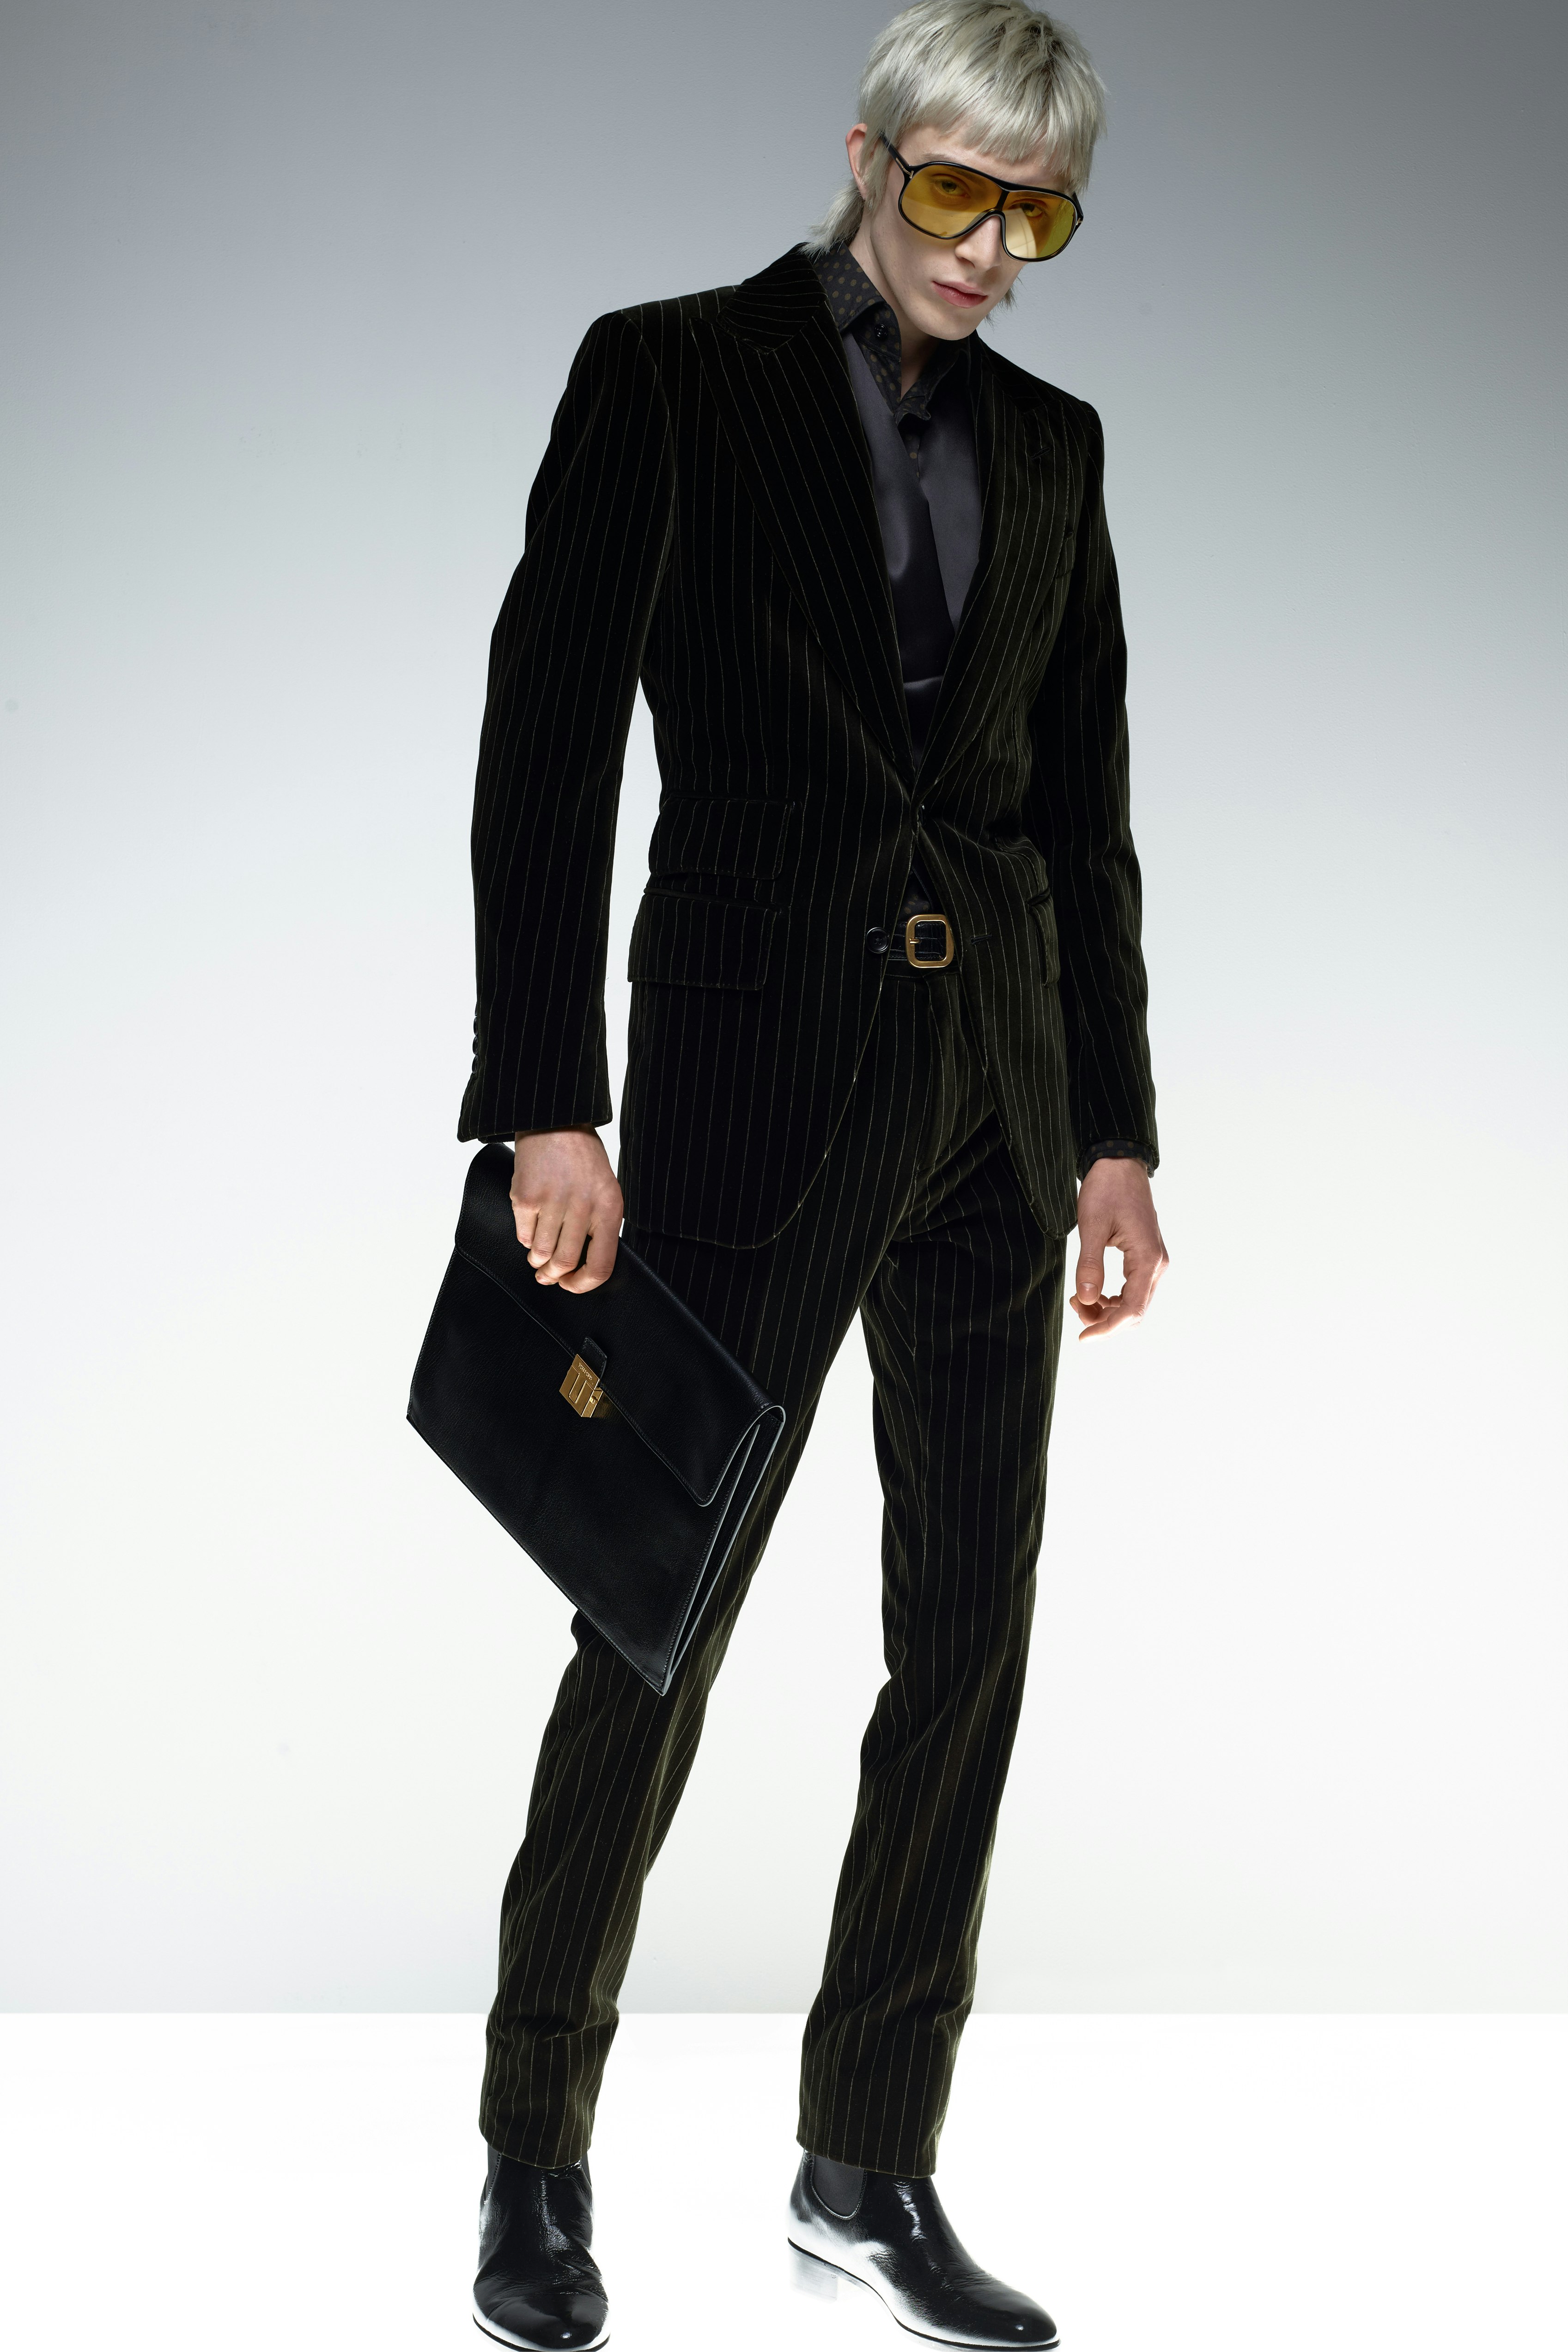 Tom Ford, Menswear Autumn Winter 2020 - 2021 Ready-to-Wear